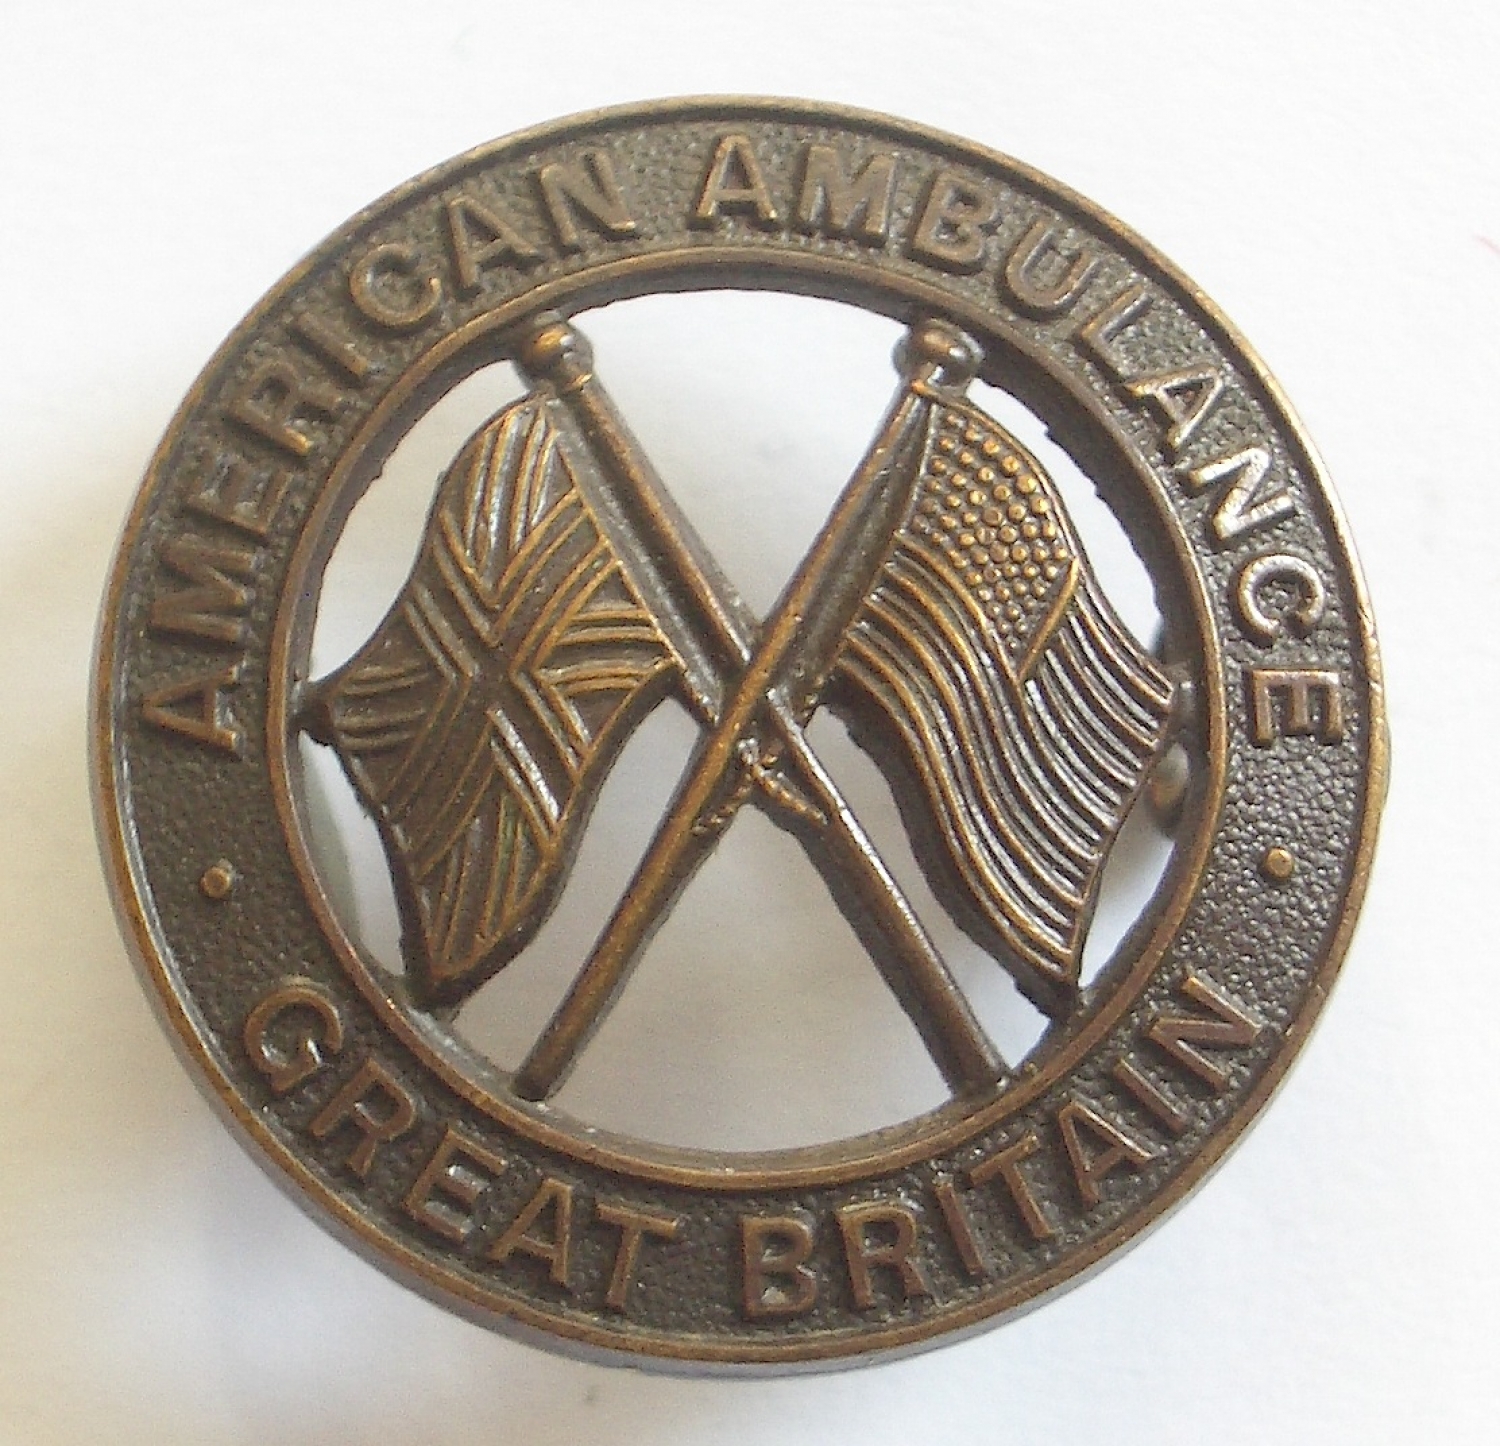 American Ambulance Great Britain badge